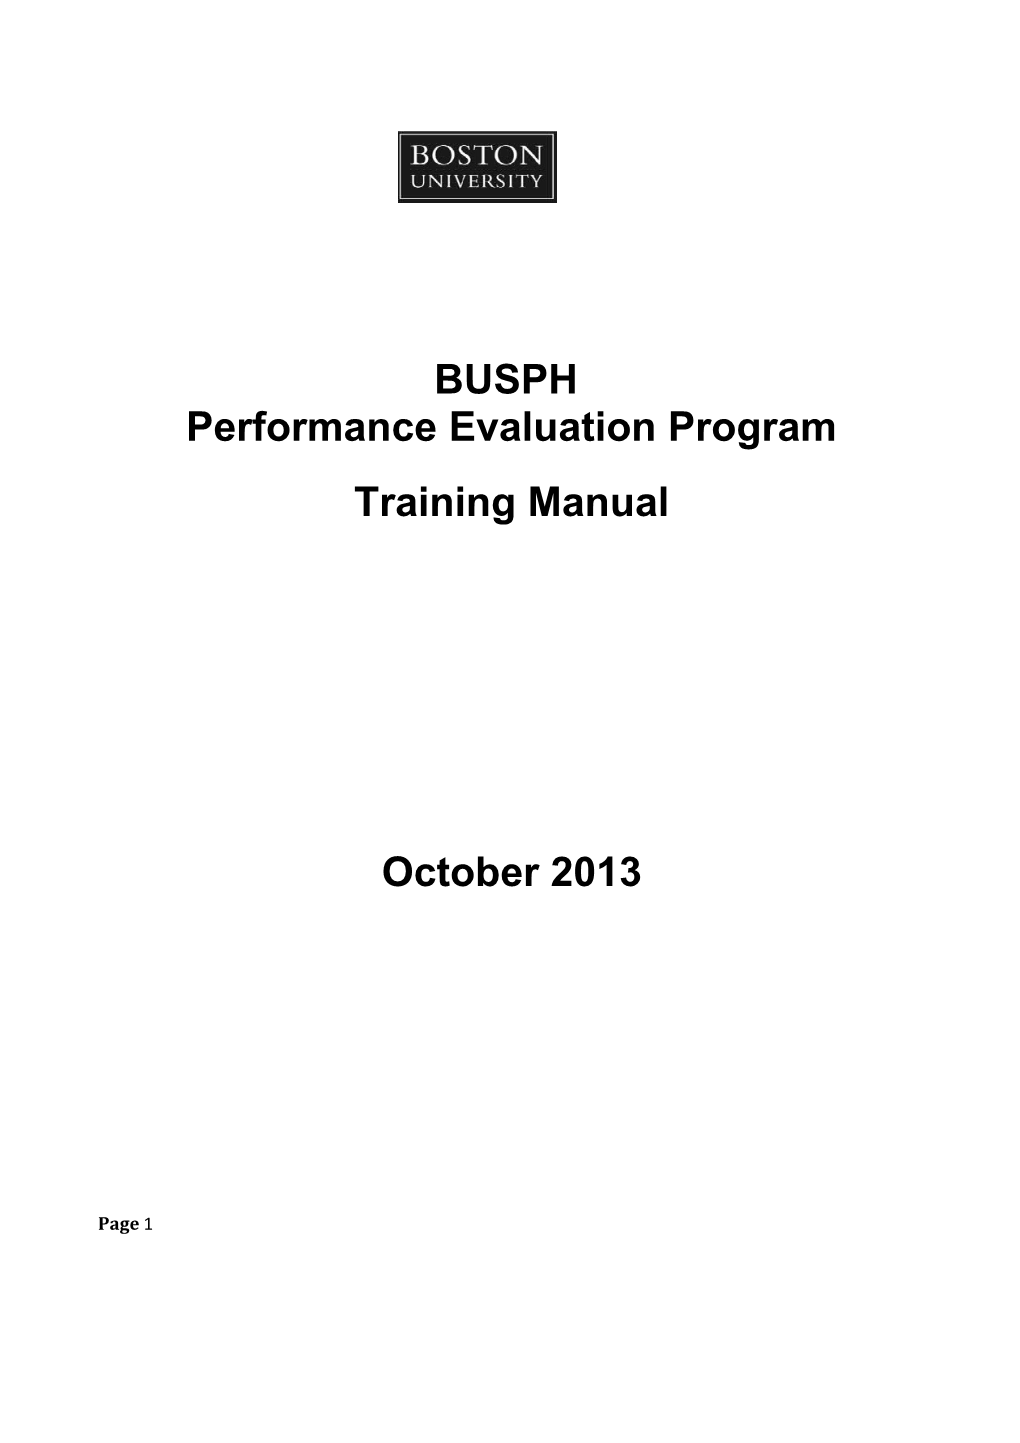 Microsoft Word - 2012 Performance Evaluation Education Manual V2